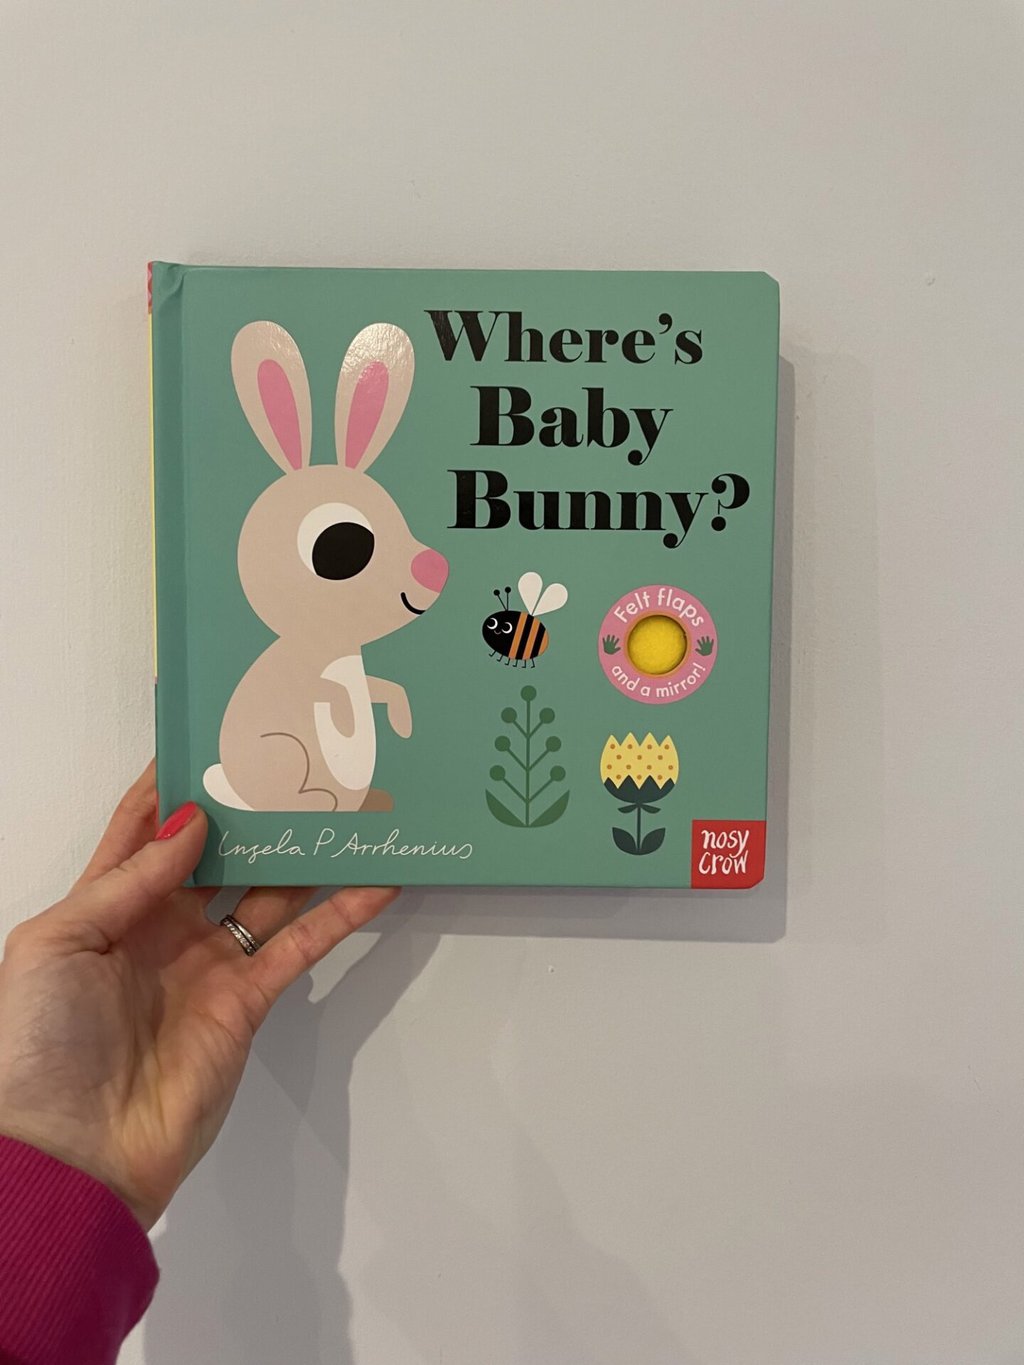 Where’s Baby Bunny?